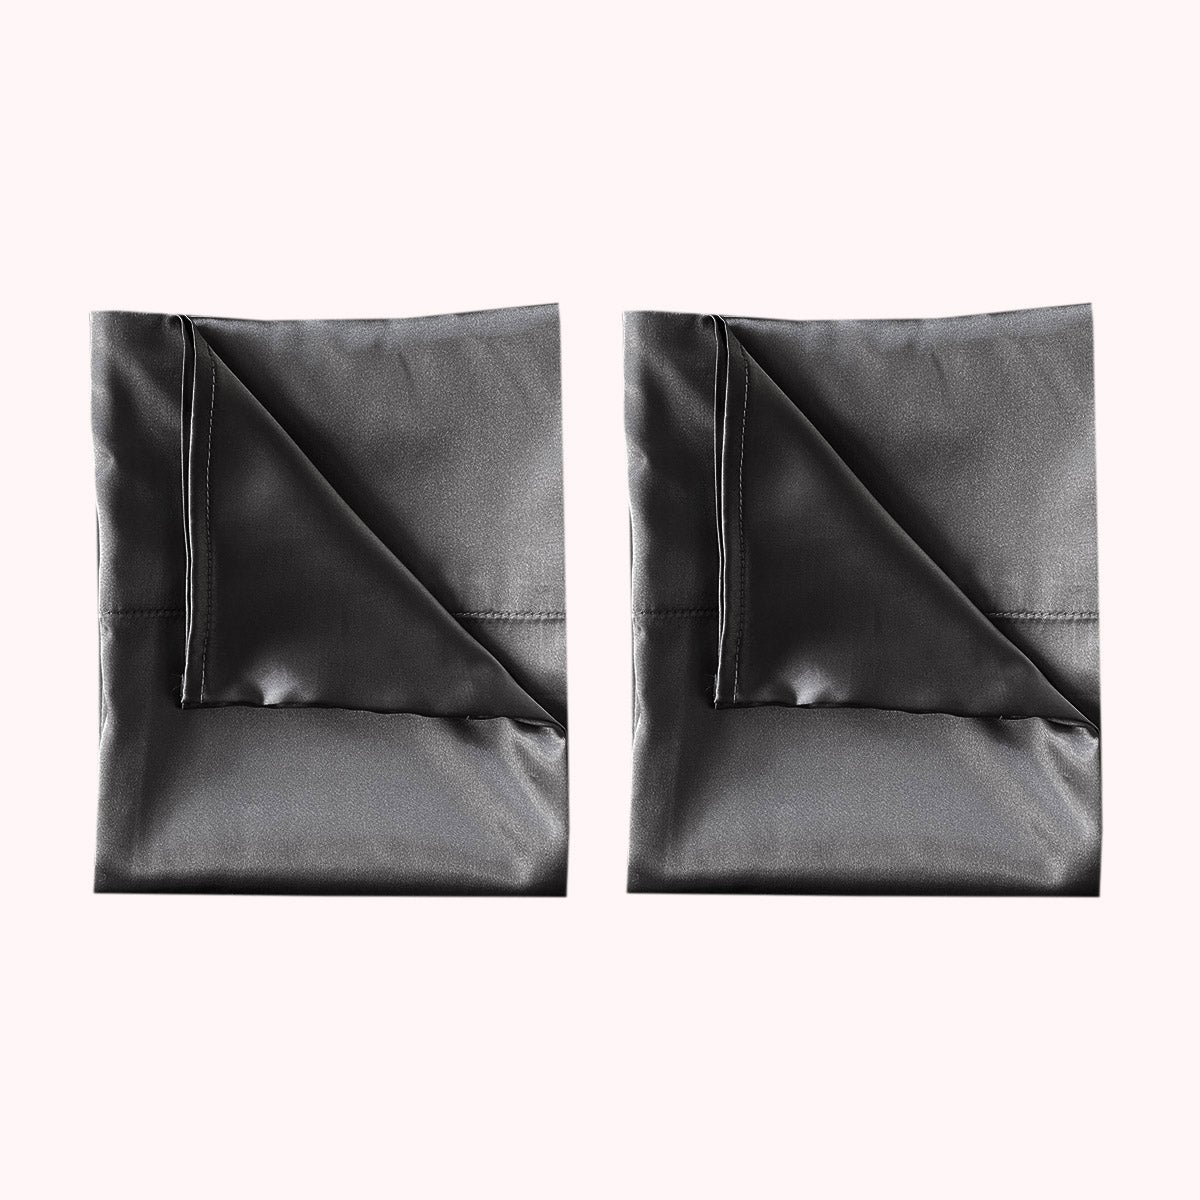 2 folded satin pillowcases in dark gray